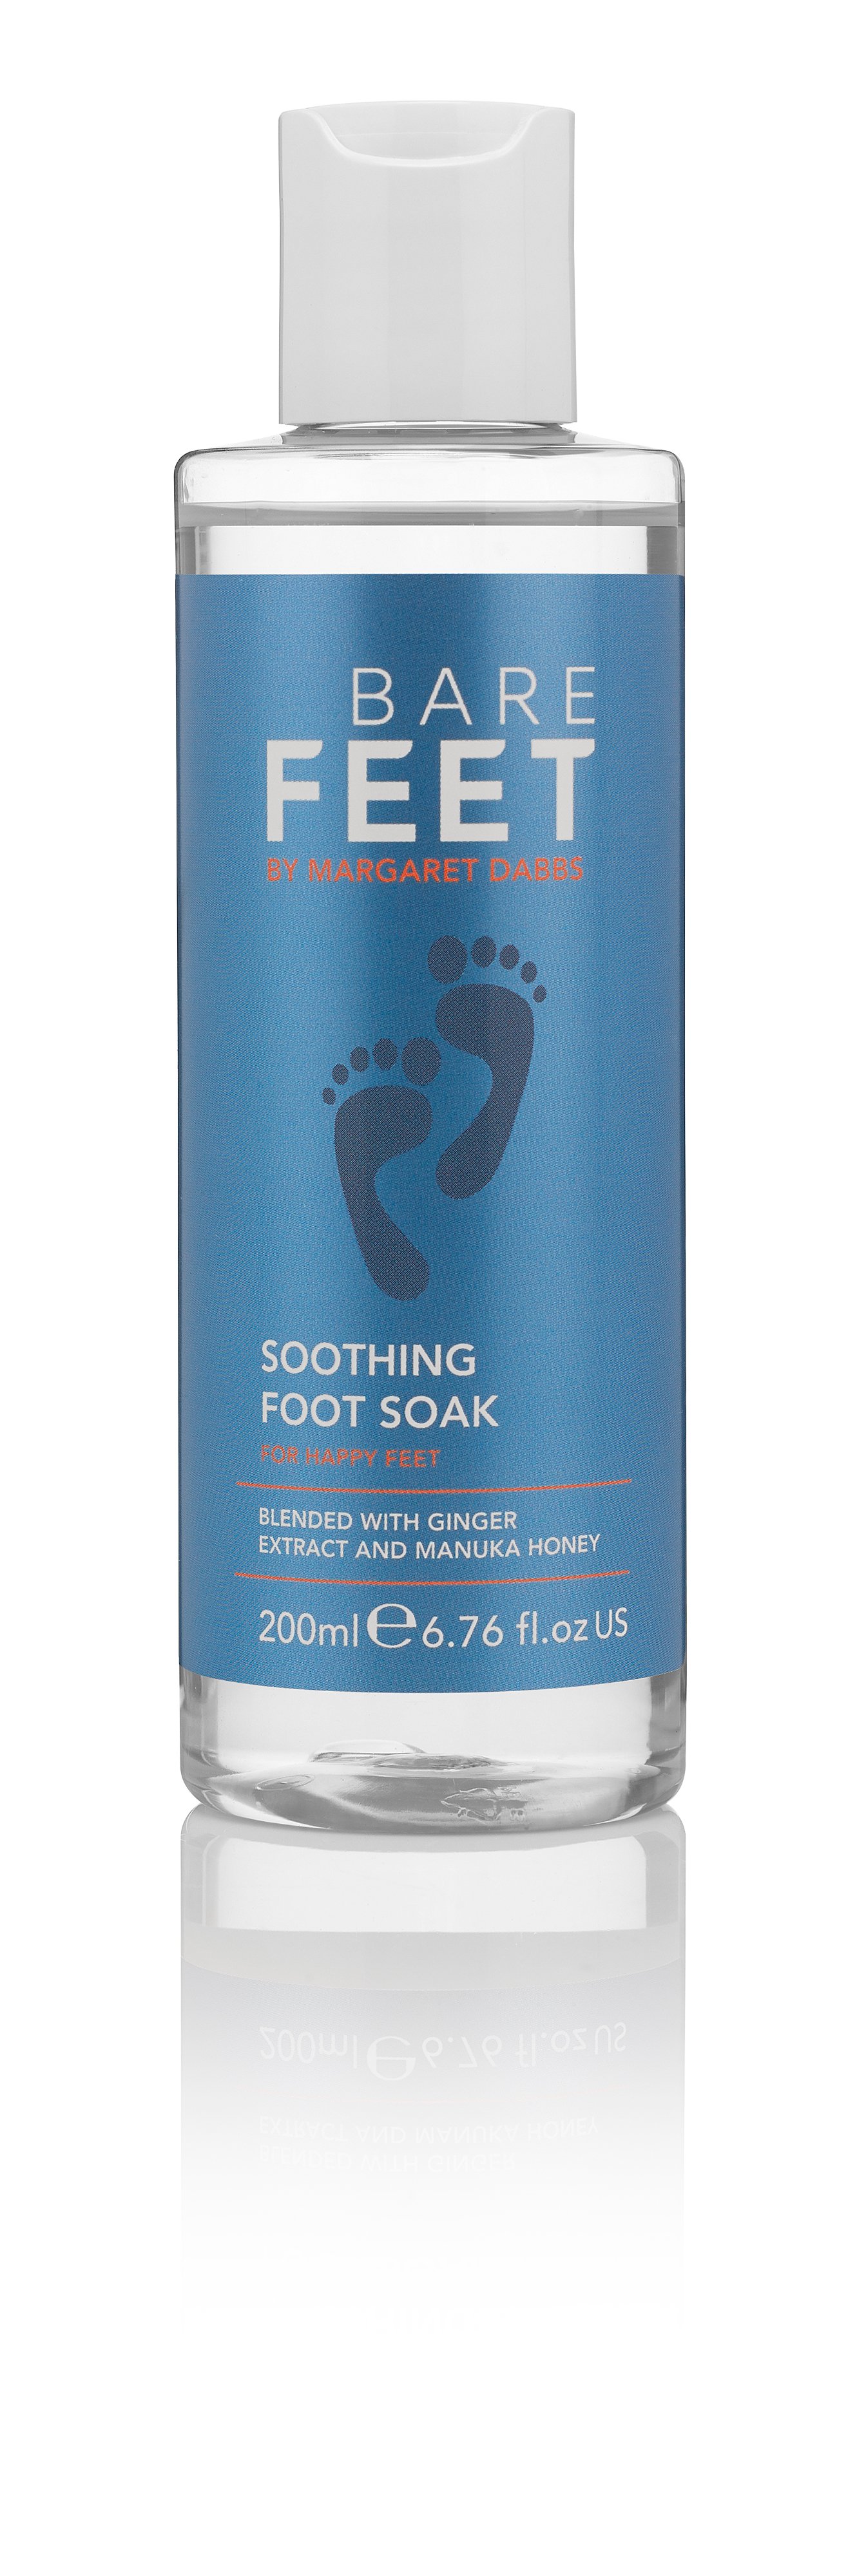 Bare feet foot soak 200 ml